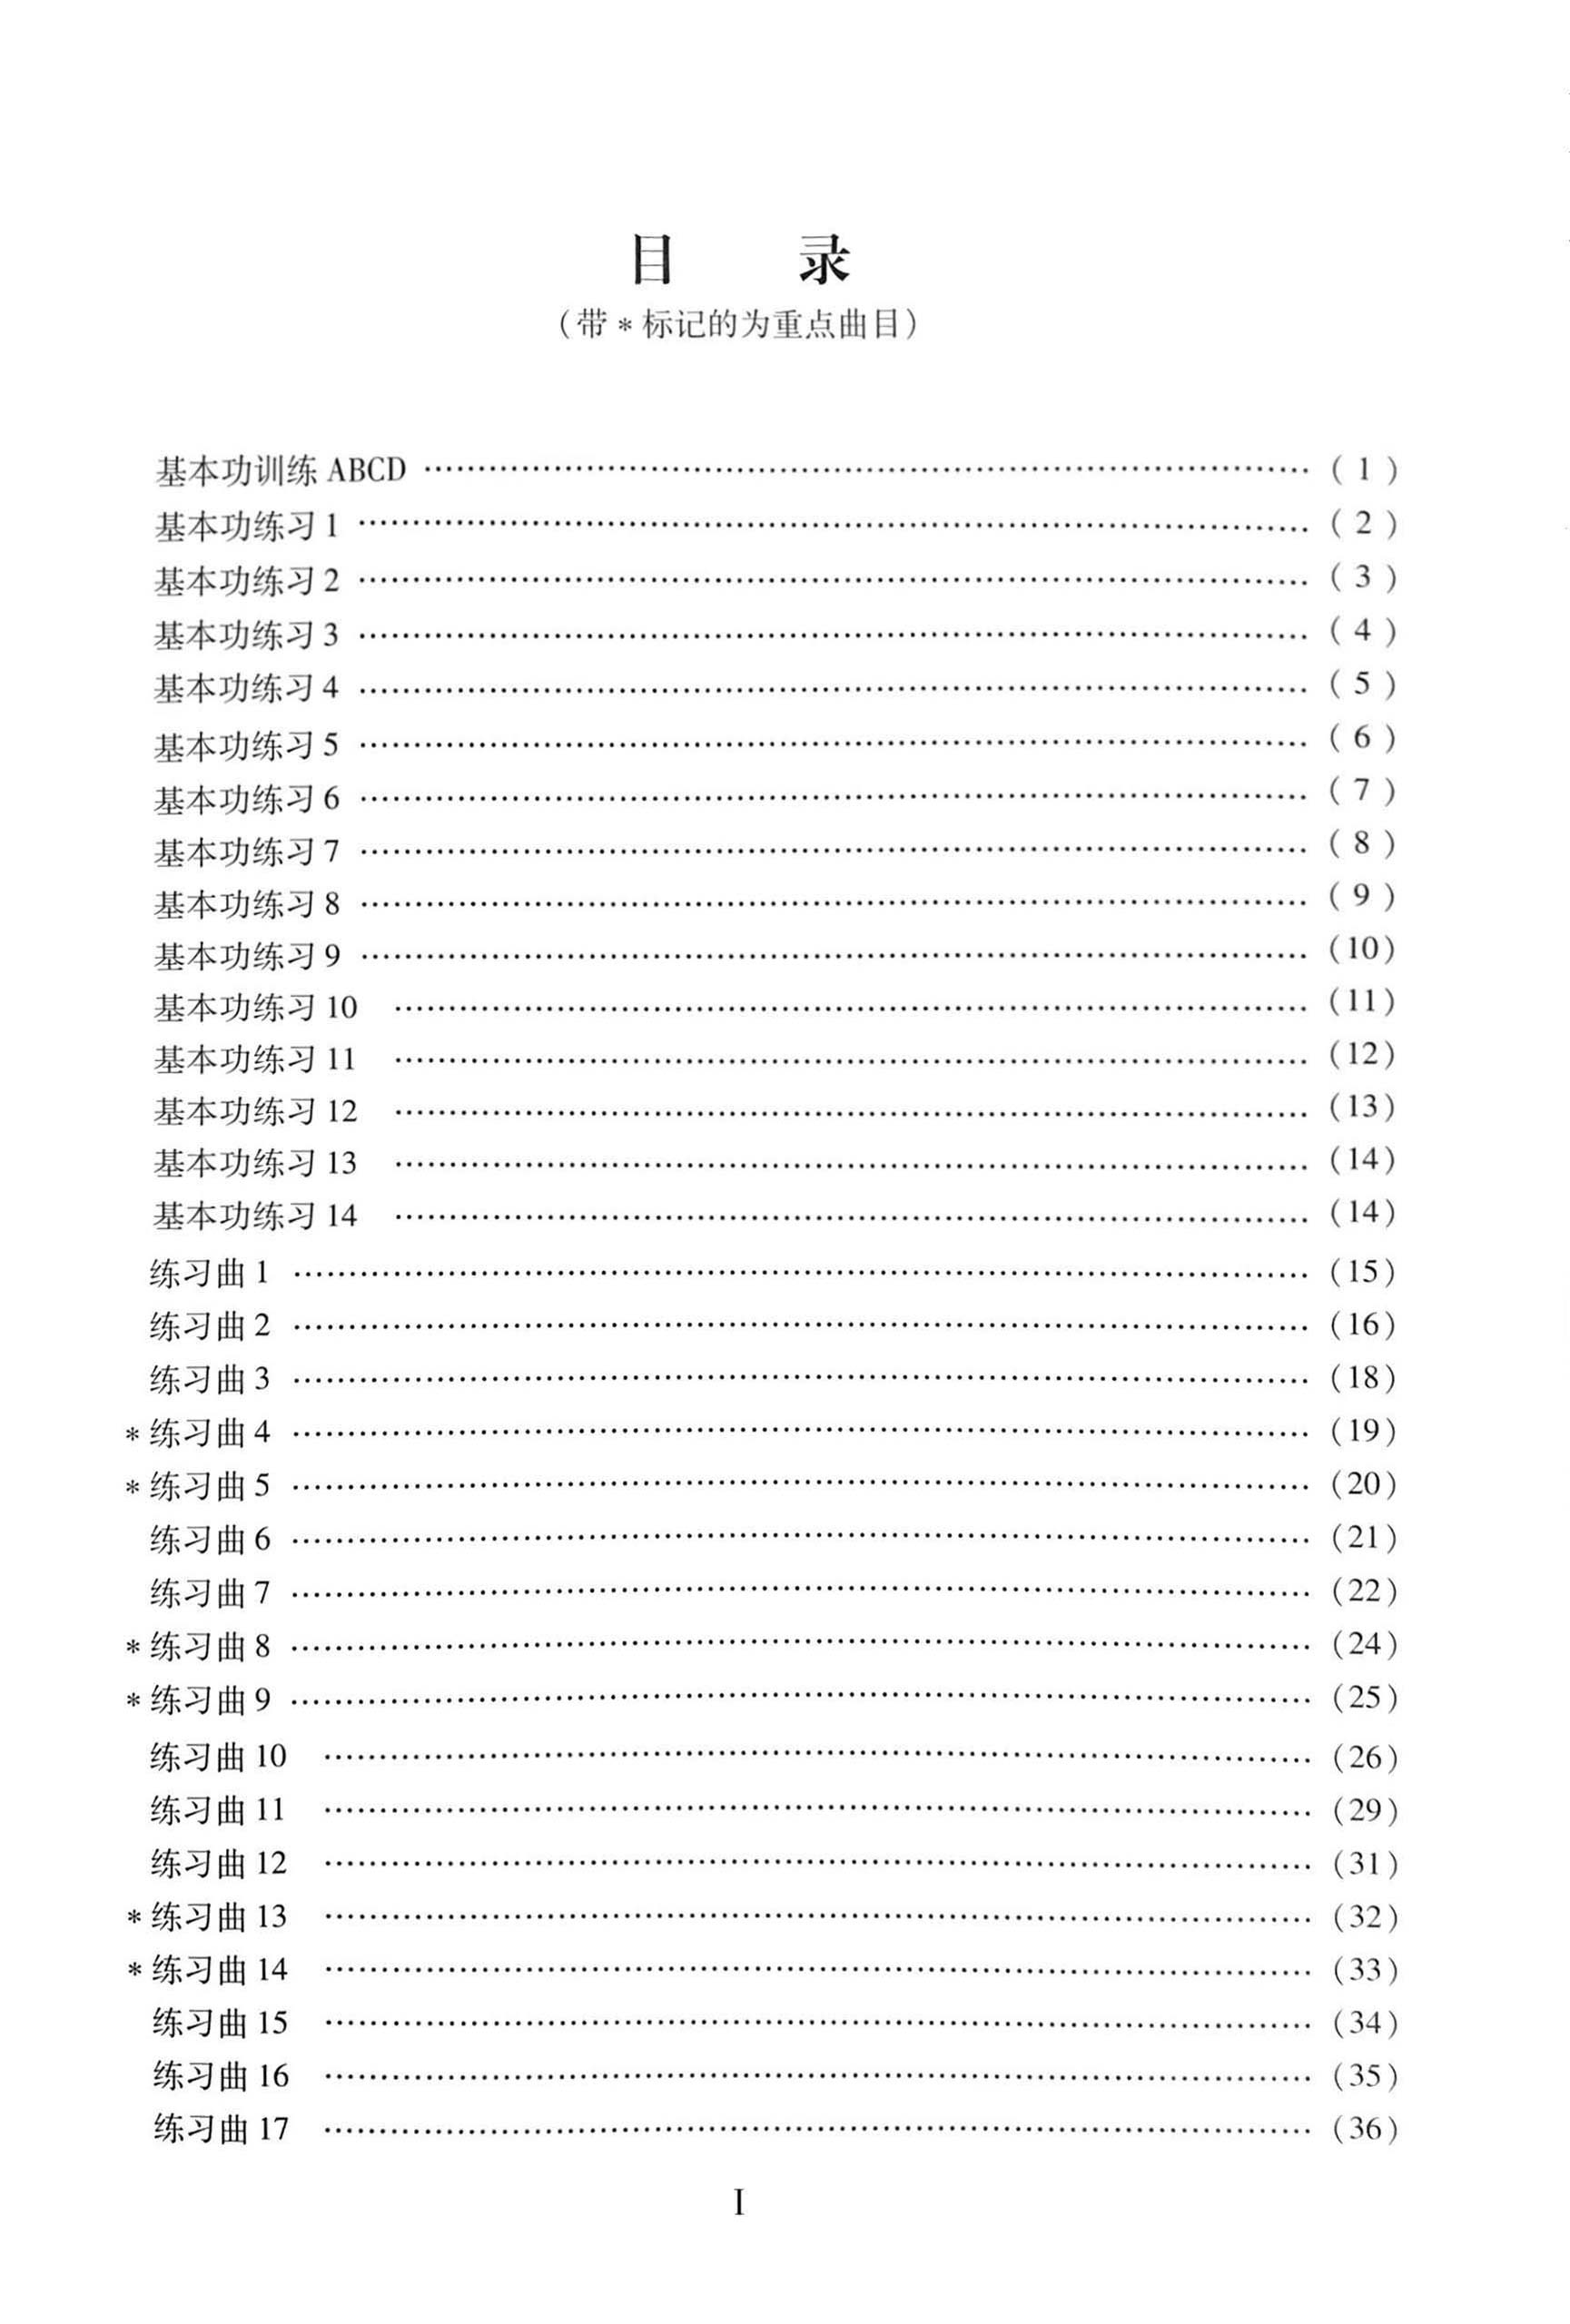 Percussion Grading Examination Book by CCOM - NAFA (Grade 1-9) Content Page 1